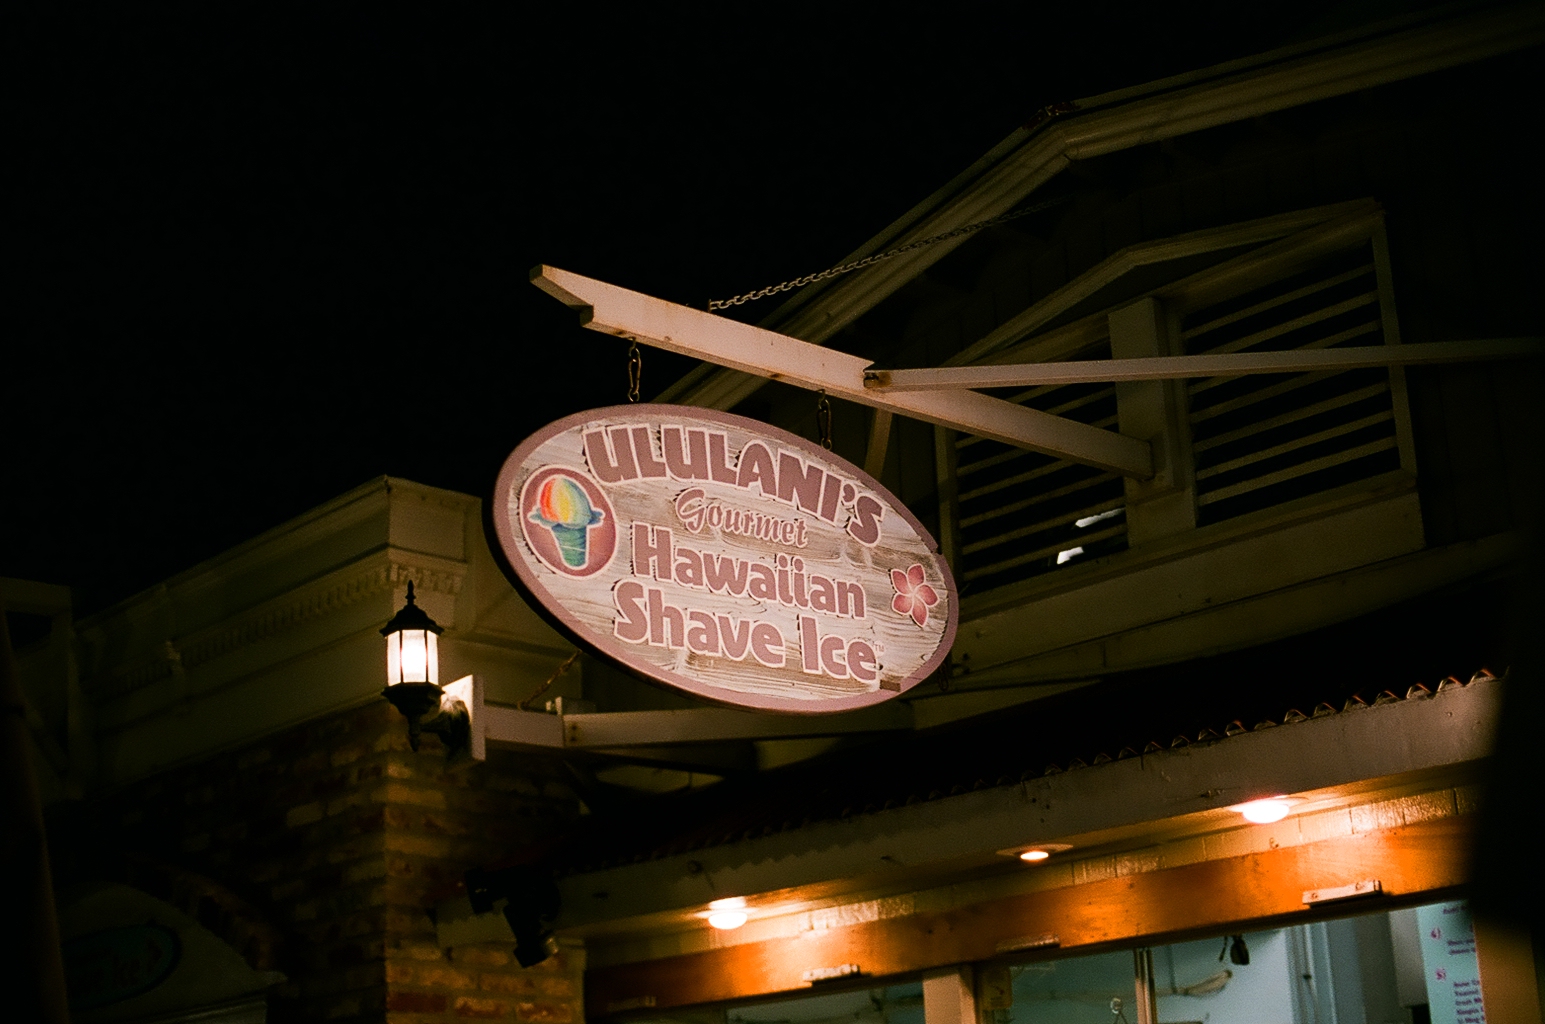 ululani's shaved ice sign at night